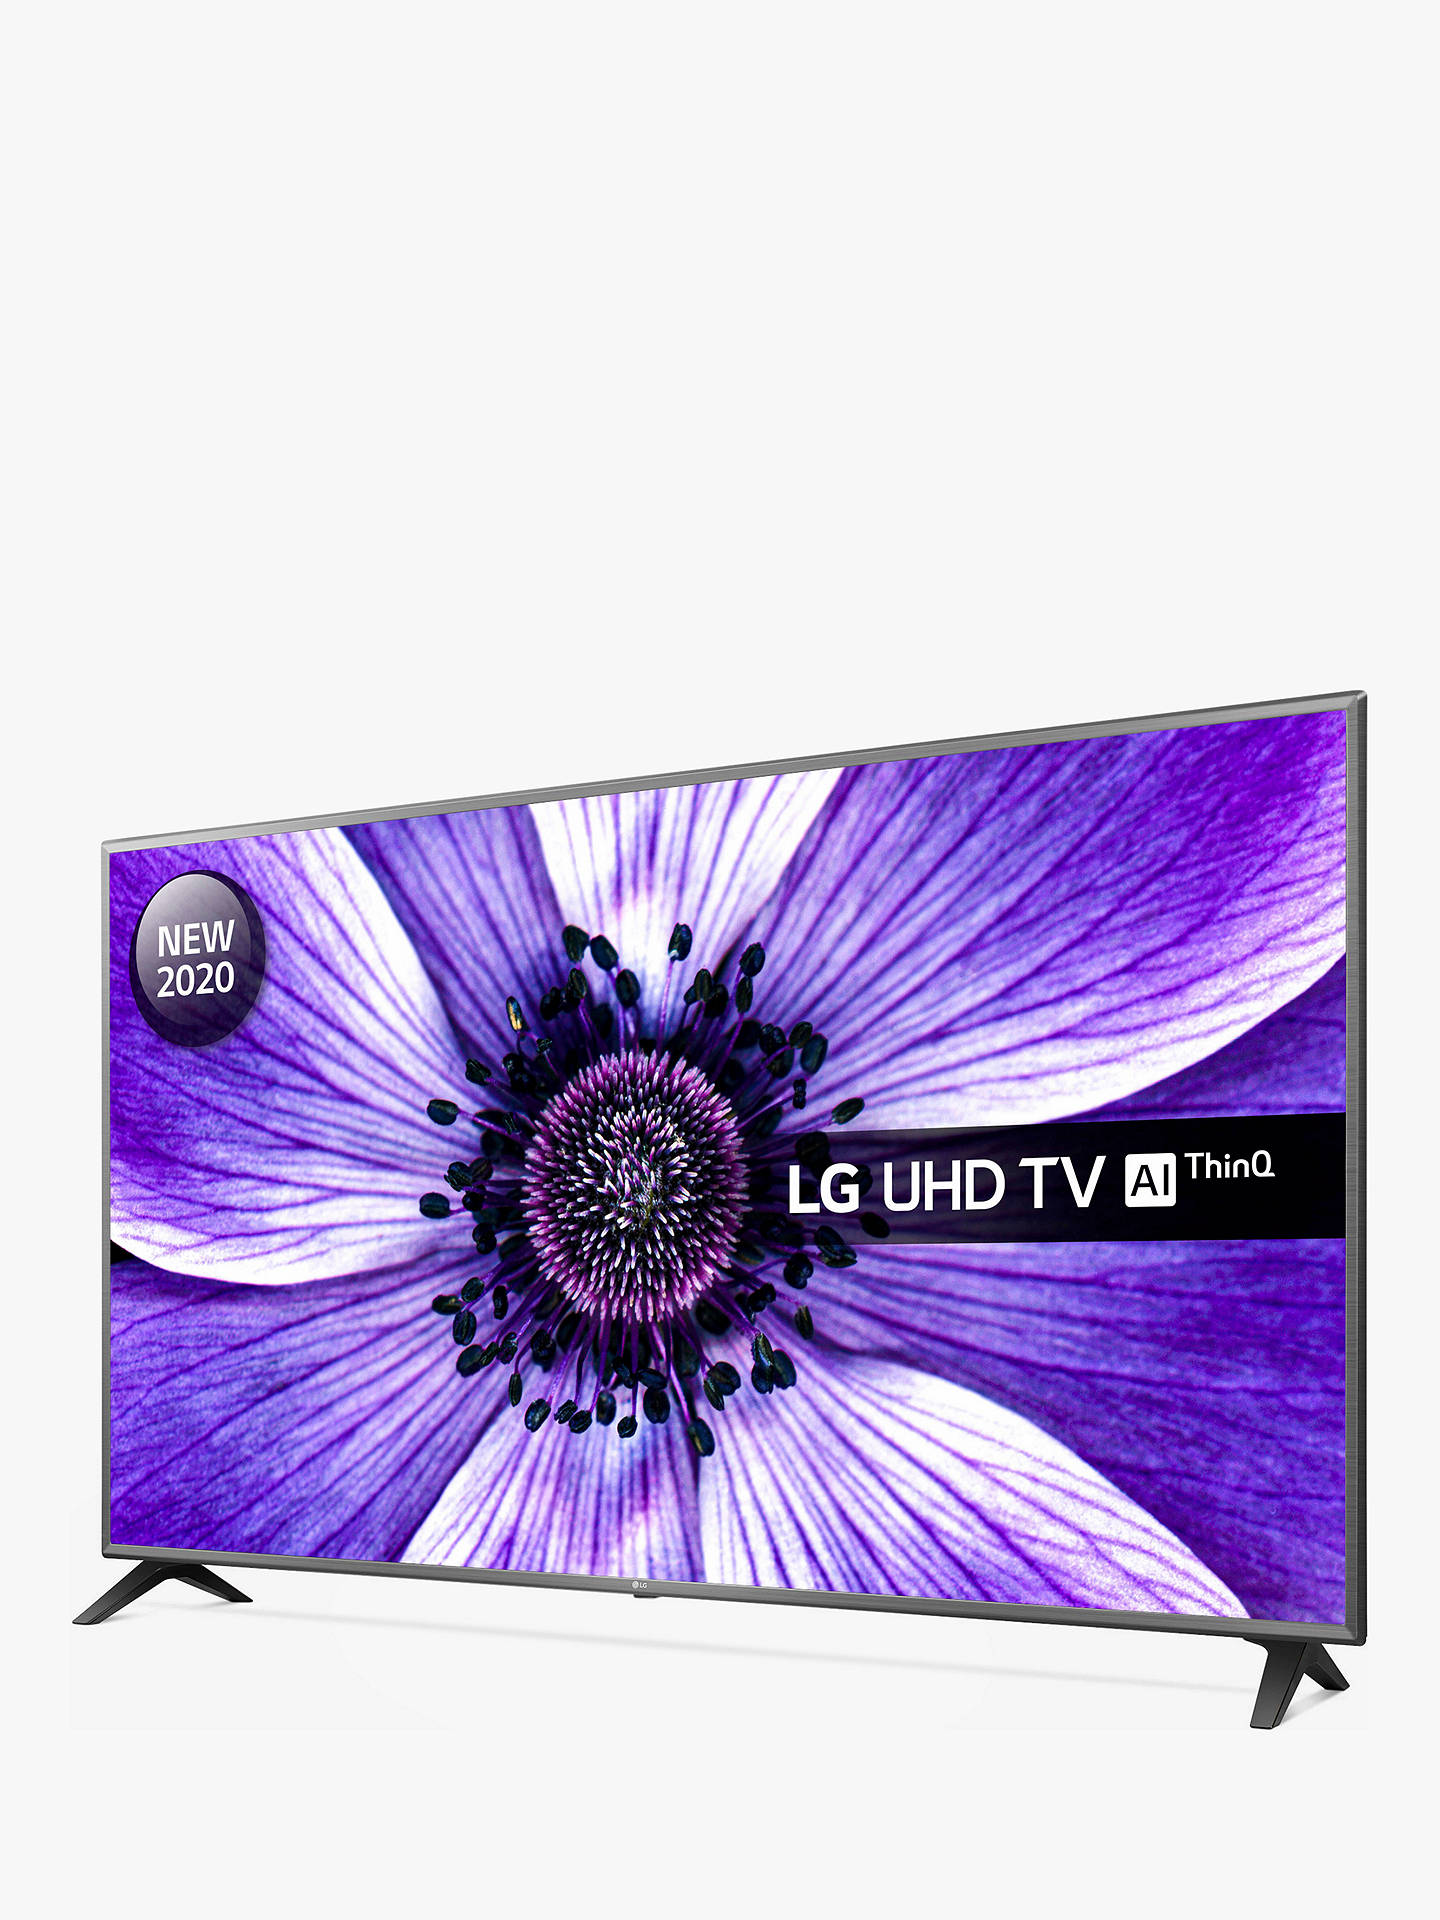 LG 75UN70706LD (2020) LED HDR 4K Ultra HD Smart TV, 75 inch with Freeview HD/Freesat HD, Black ...